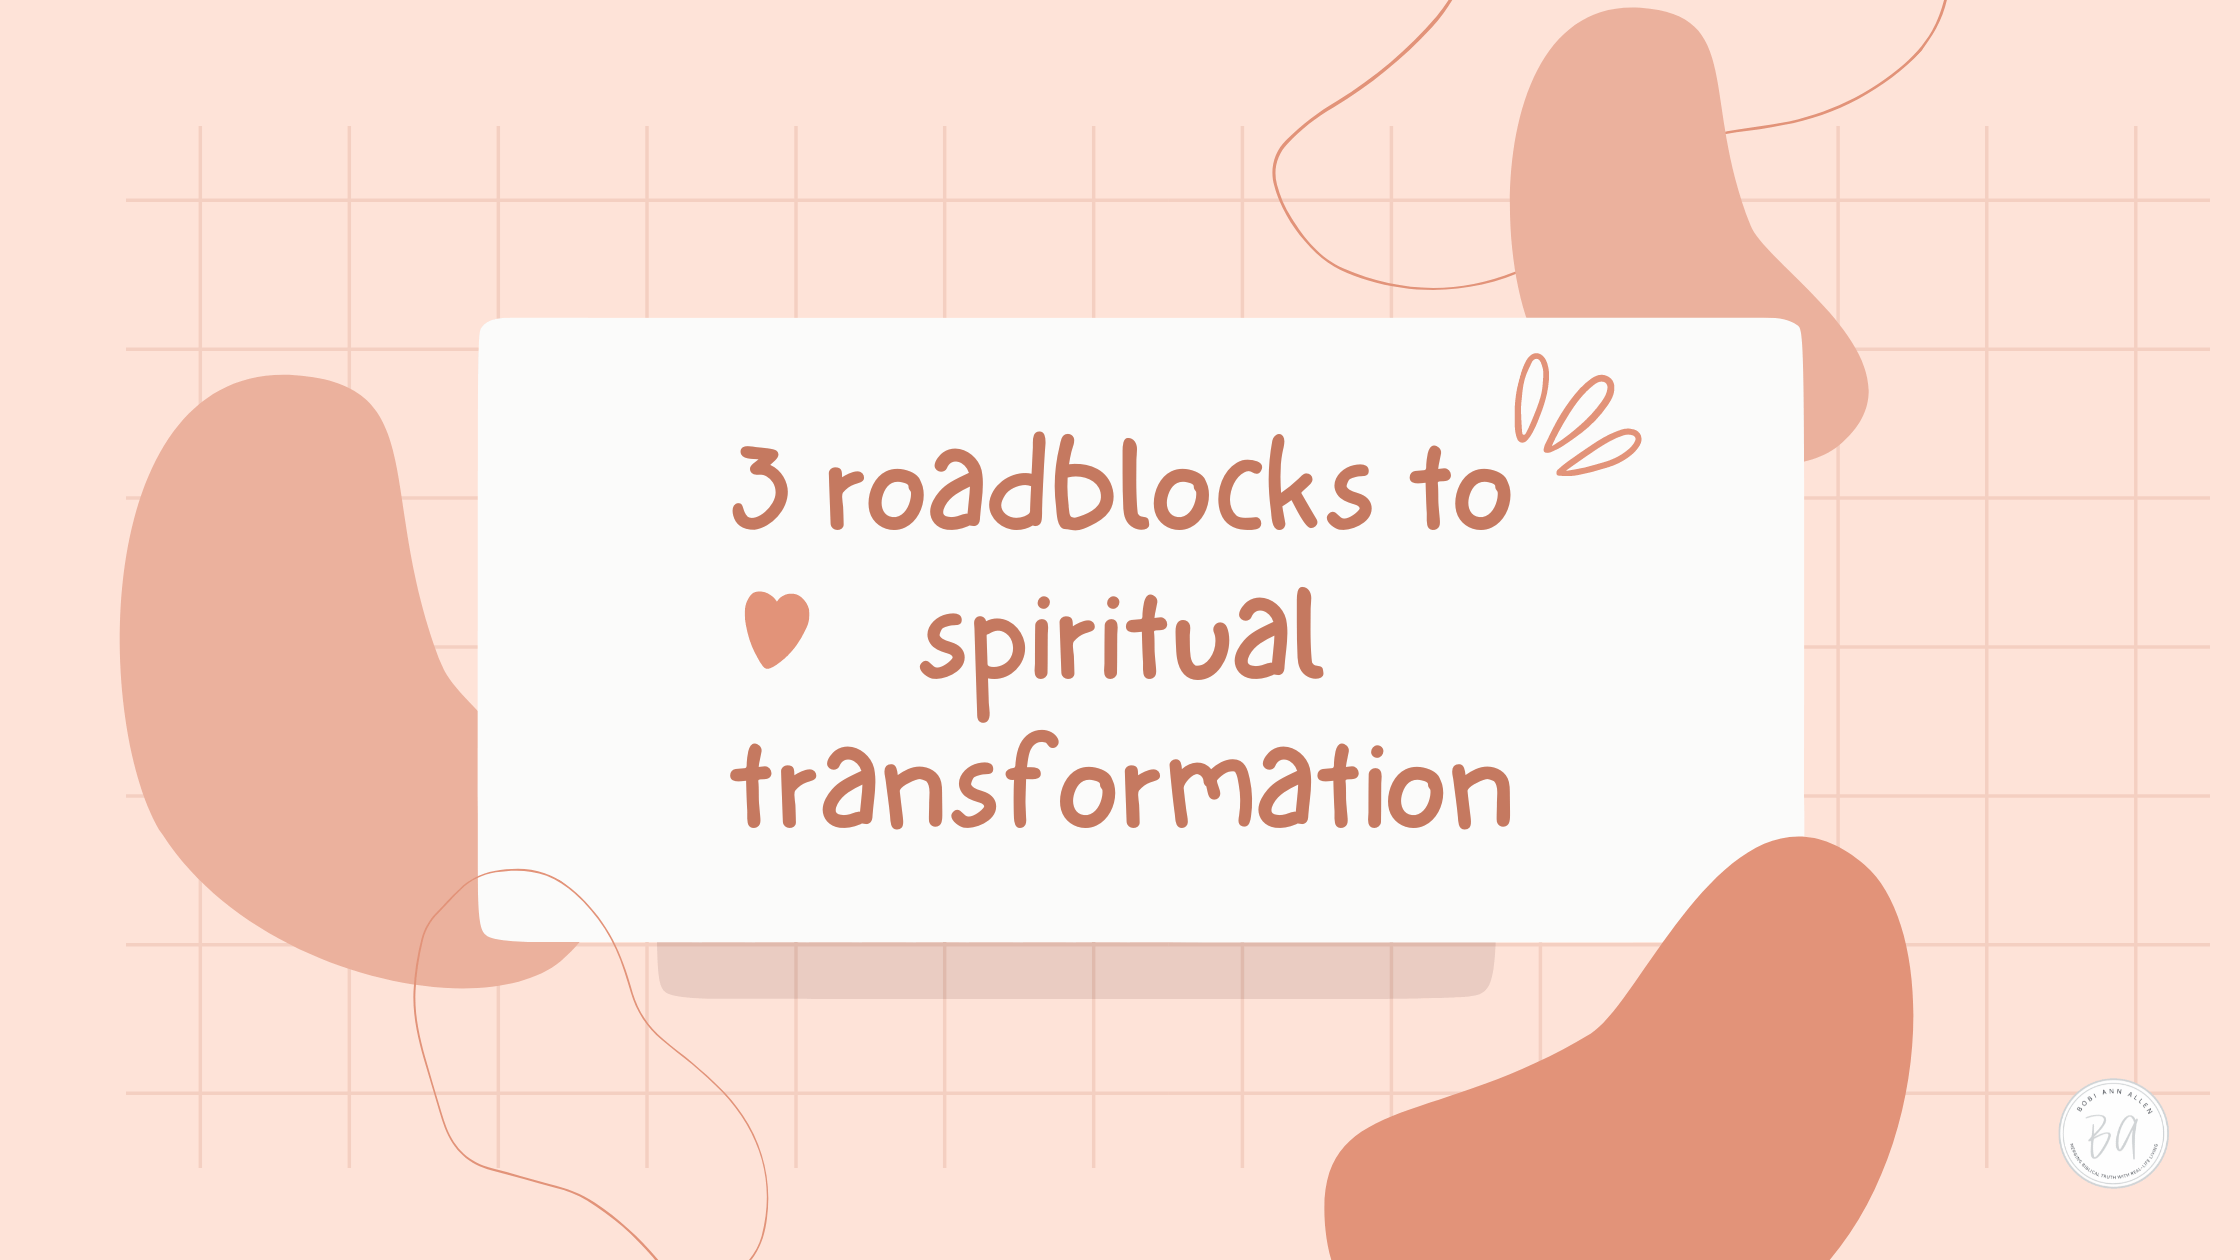 roadblocks to transformation